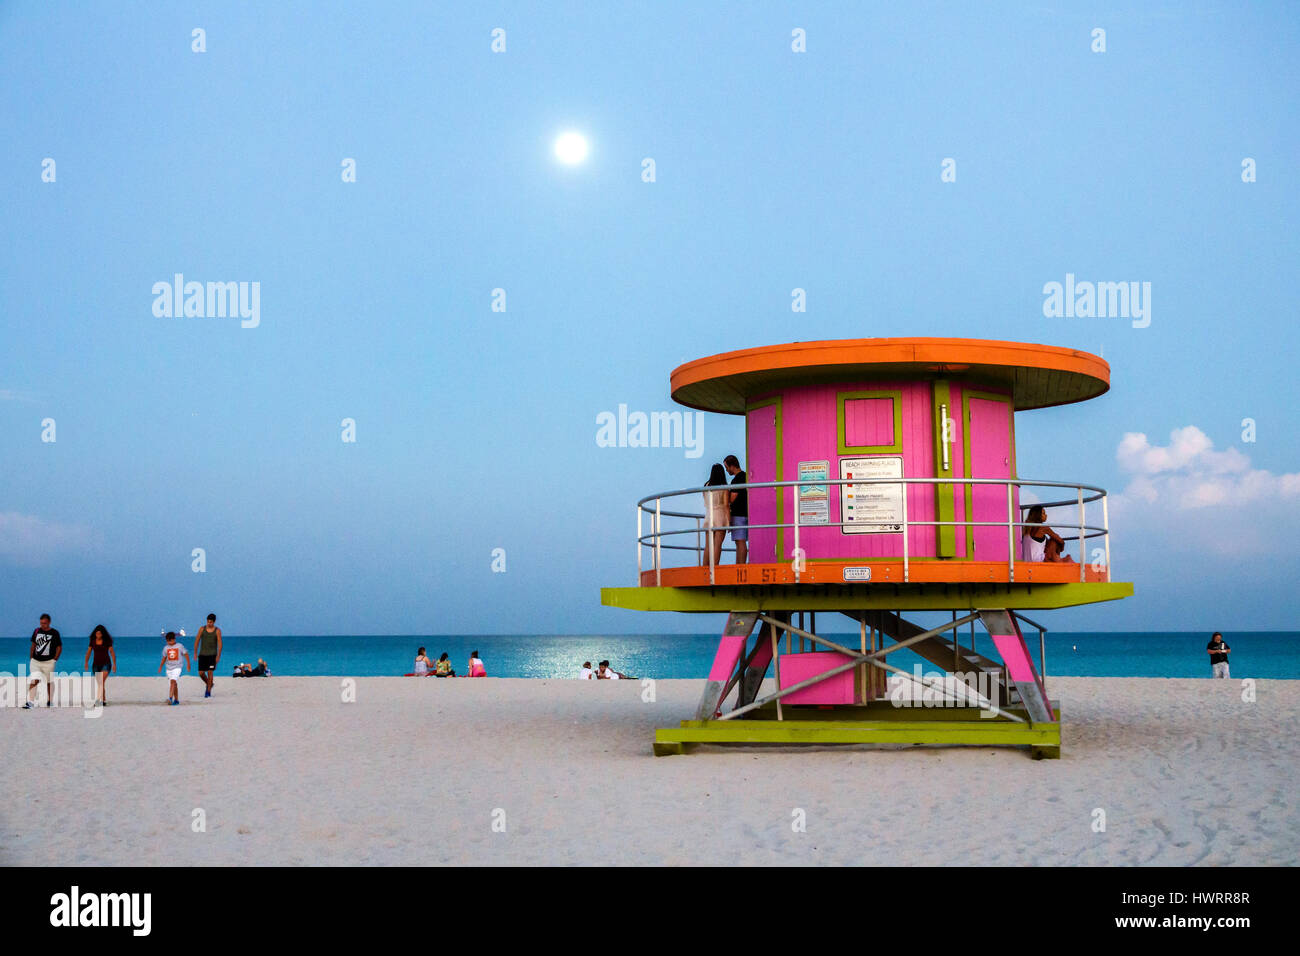 Miami Beach Florida,South Beach,Atlantic Ocean,sand,lifeguard station,moon,reflection on water,twilight,couple,round structure,FL170209020 Stock Photo